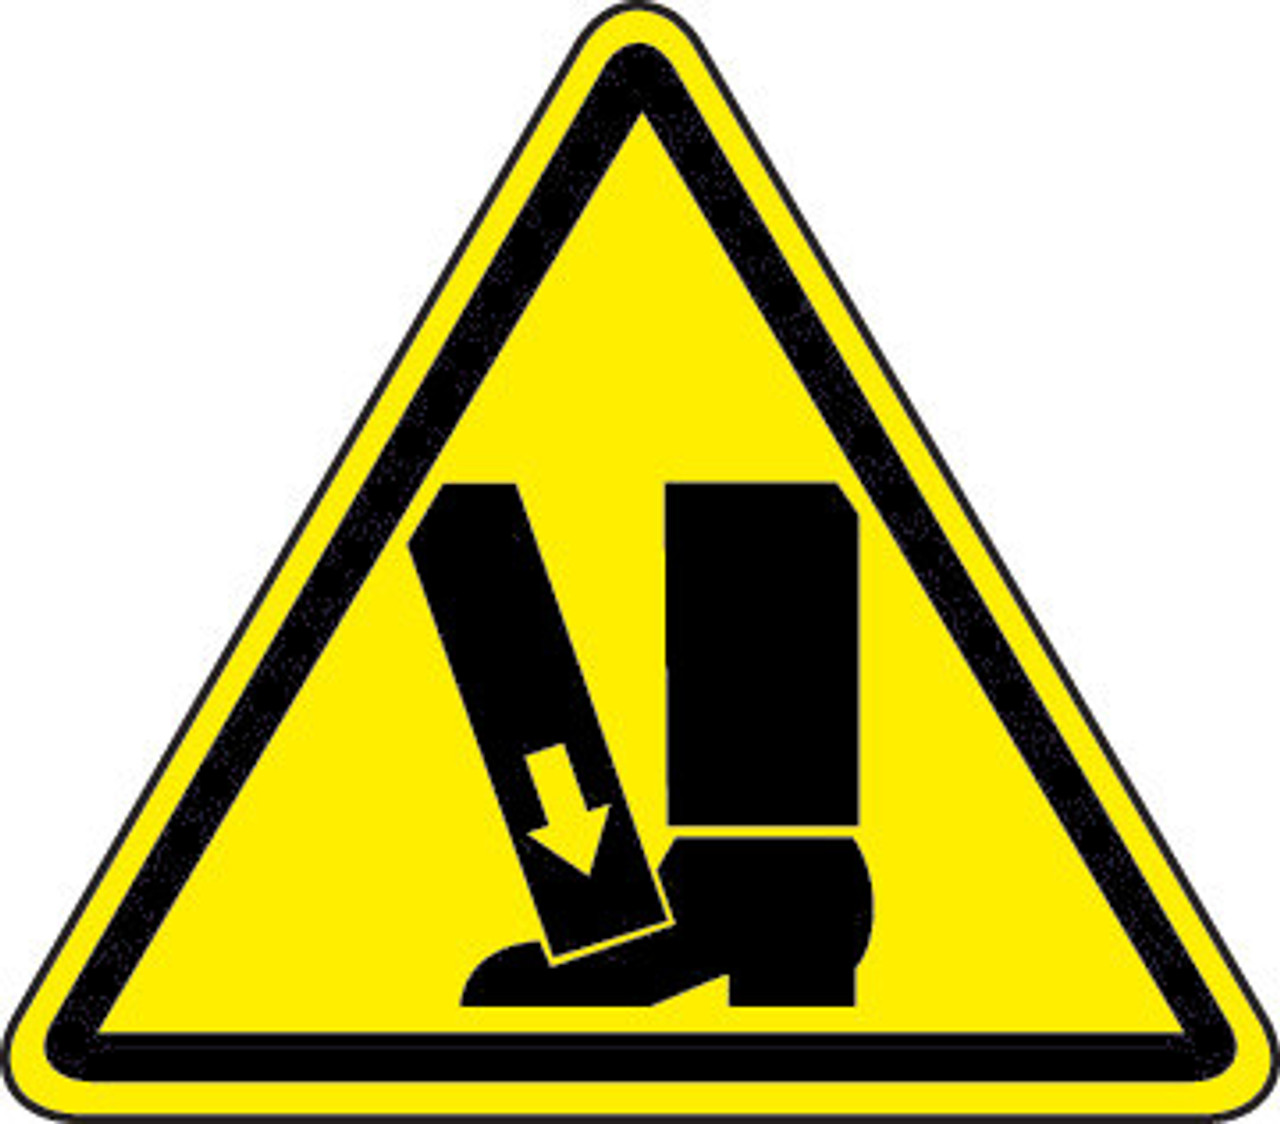 Crushing Of Toes/Foot Hazard (ISO Triangle Hazard Symbol)